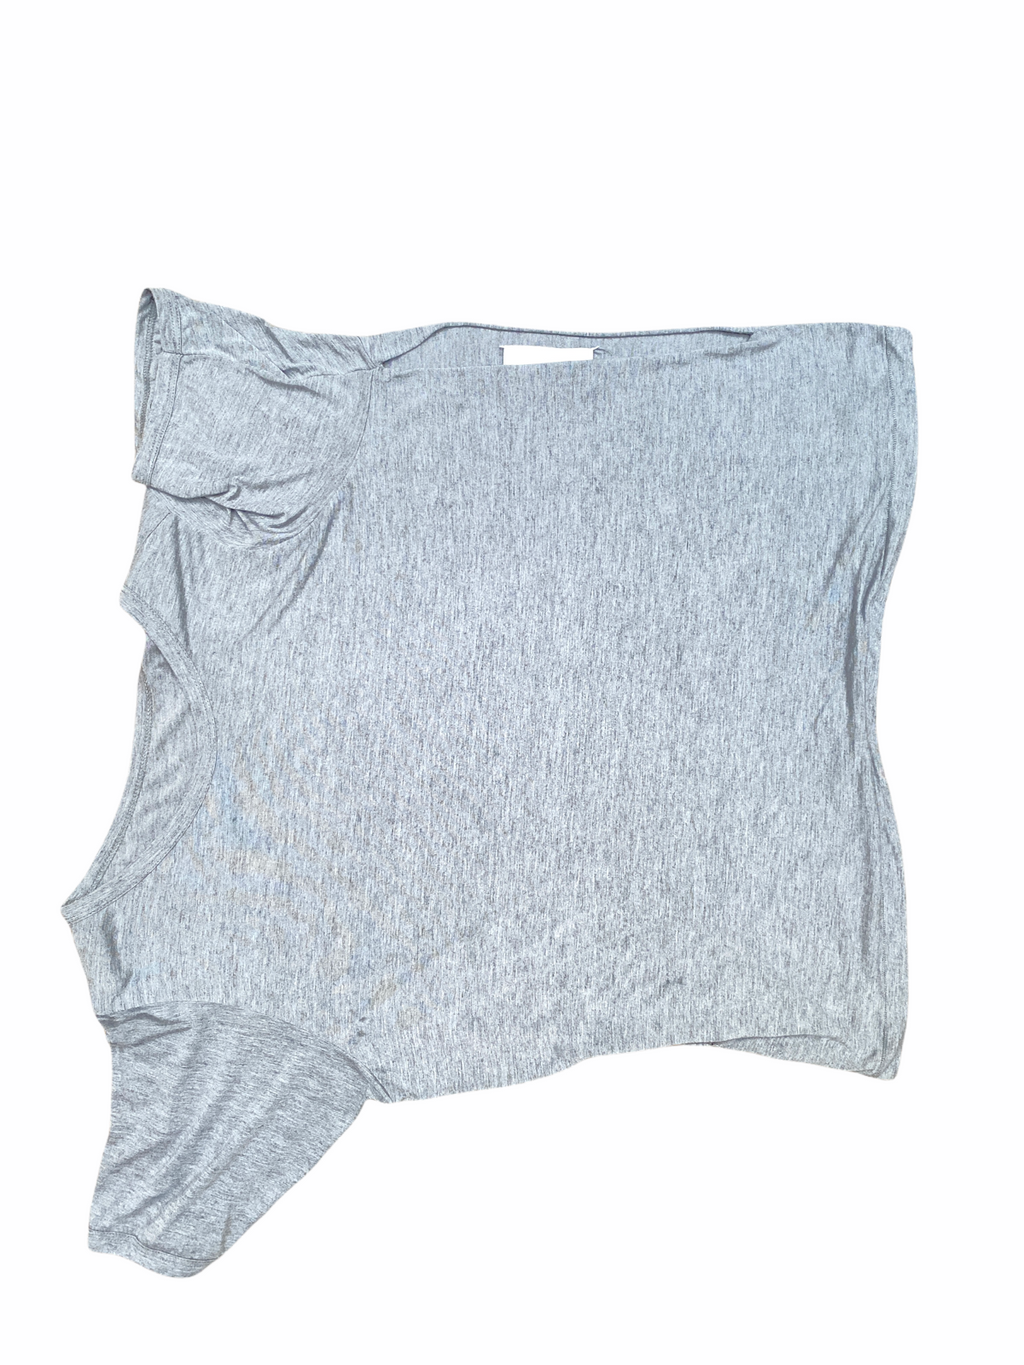 SS 2005 Grey Upside Down T-shirt Size